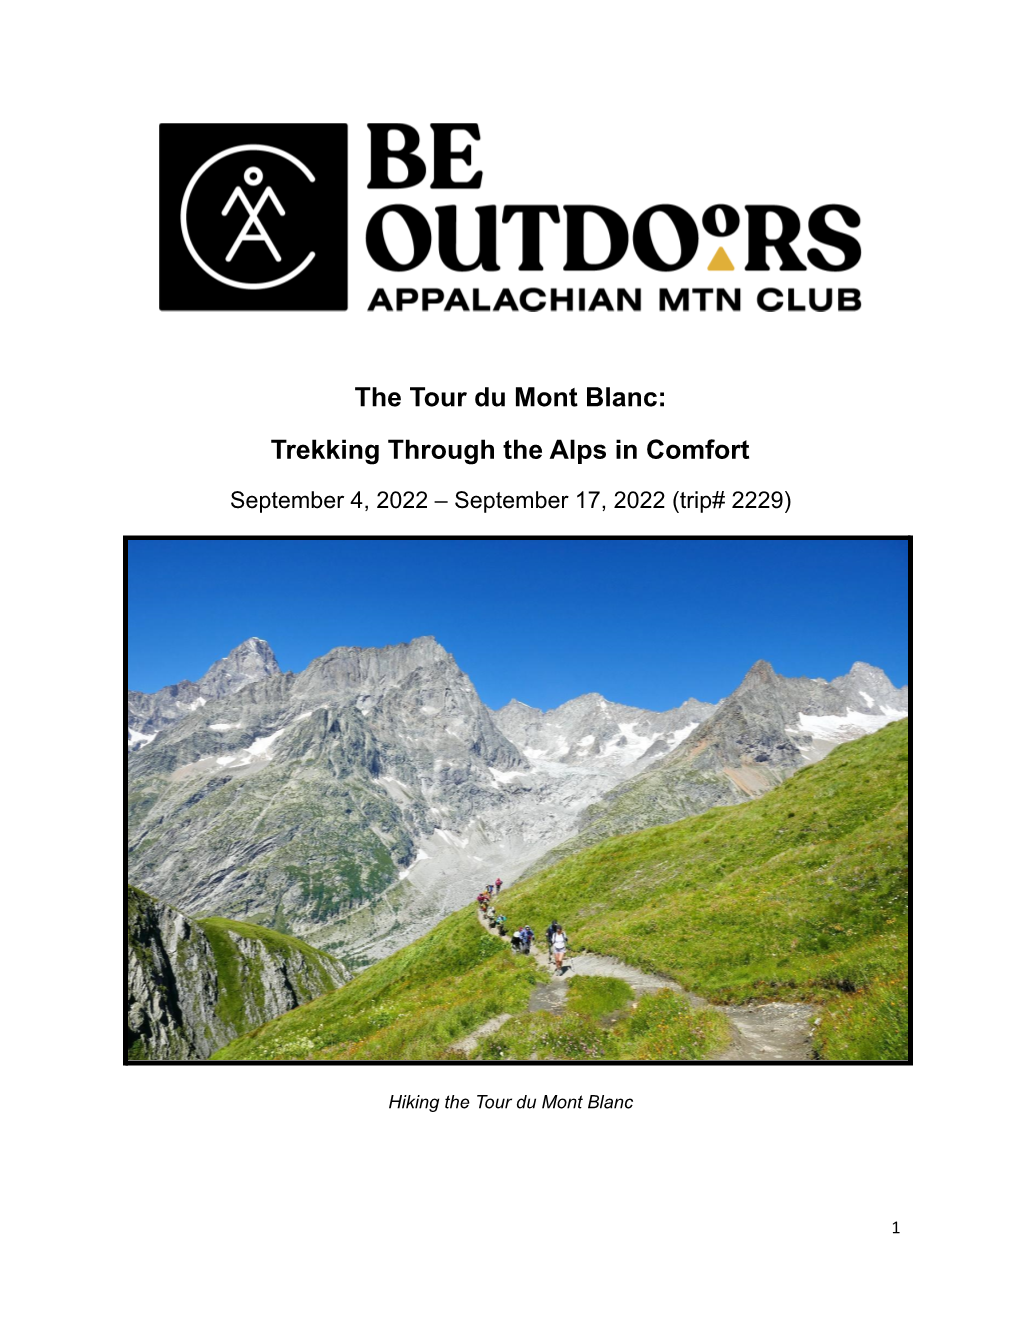 The Tour Du Mont Blanc: Trekking Through the Alps in Comfort